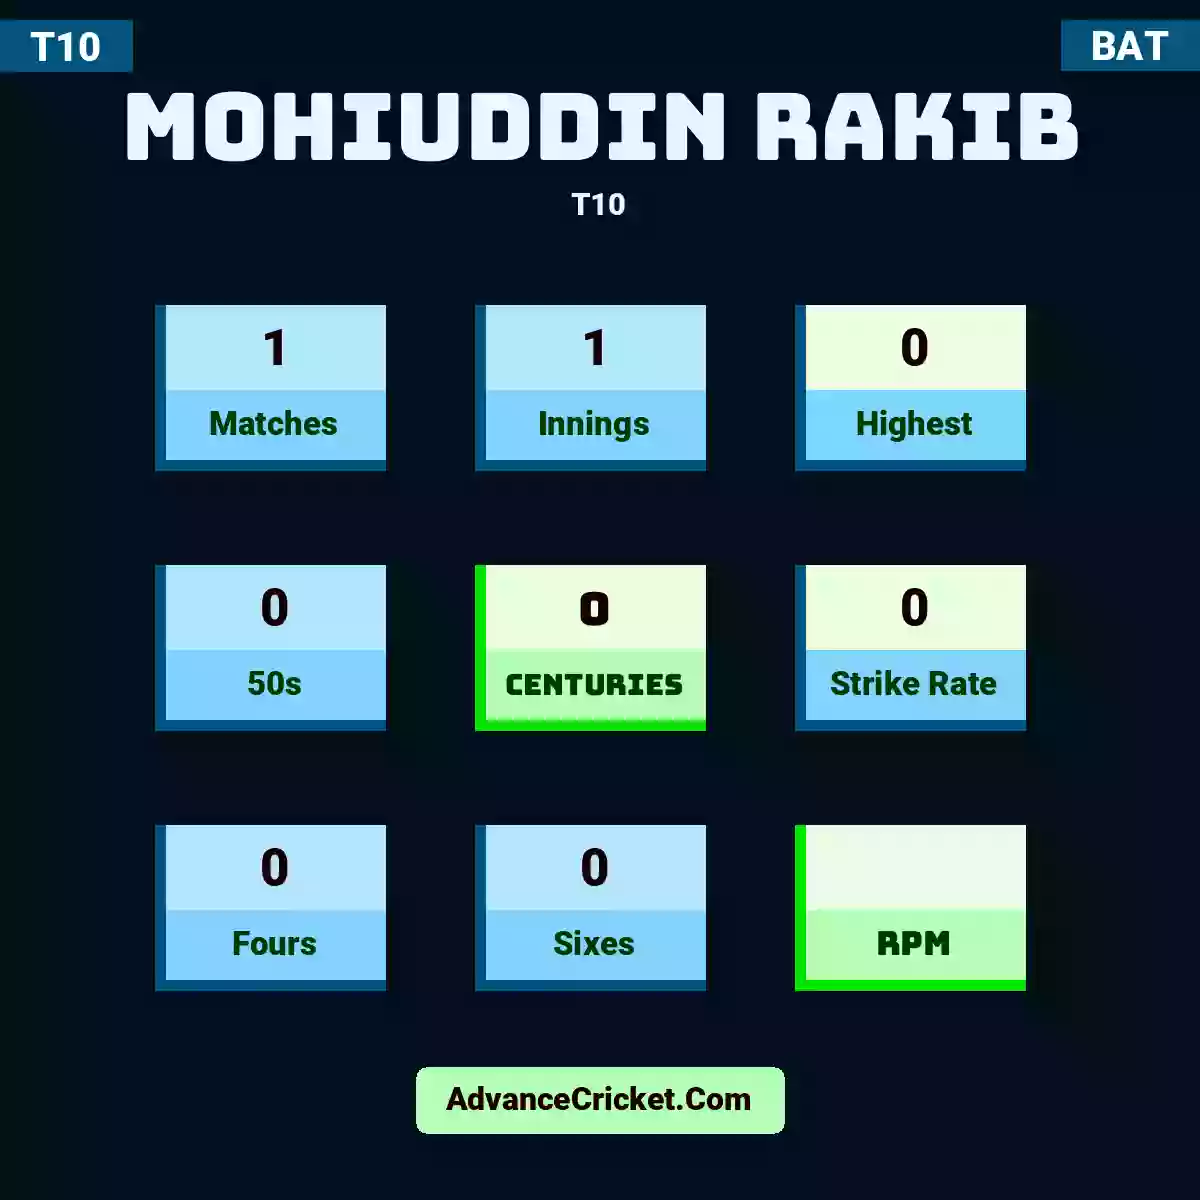 Mohiuddin Rakib T10 , Mohiuddin Rakib played 1 matches, scored 0 runs as highest, 0 half-centuries, and 0 centuries, with a strike rate of 0. M.Rakib hit 0 fours and 0 sixes.